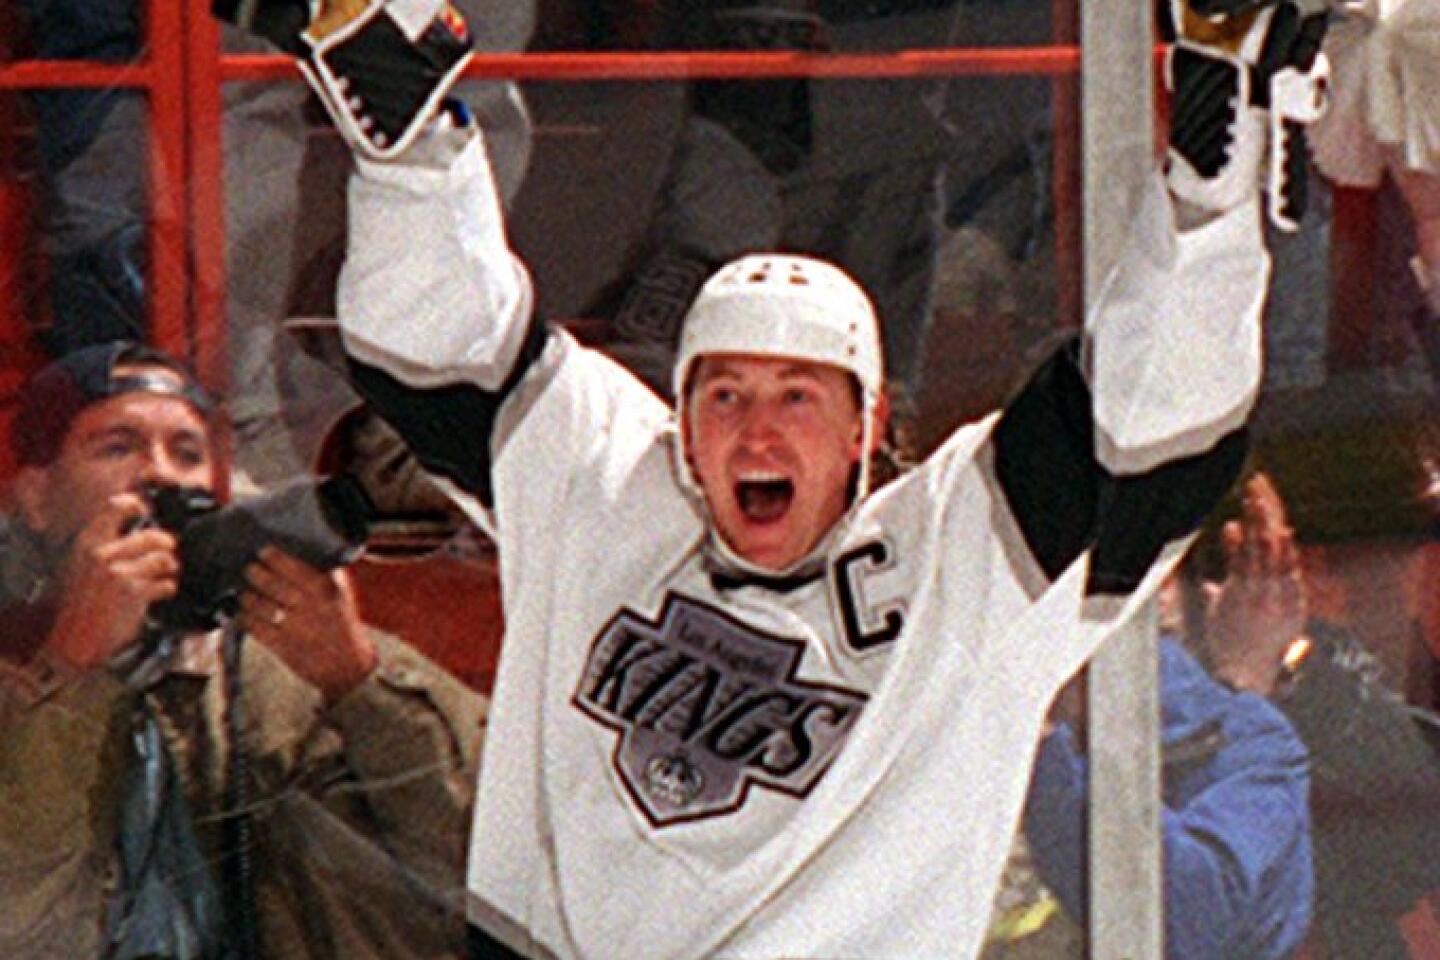 Wayne Gretzky scores no. 802 to break Gordie Howe's record.